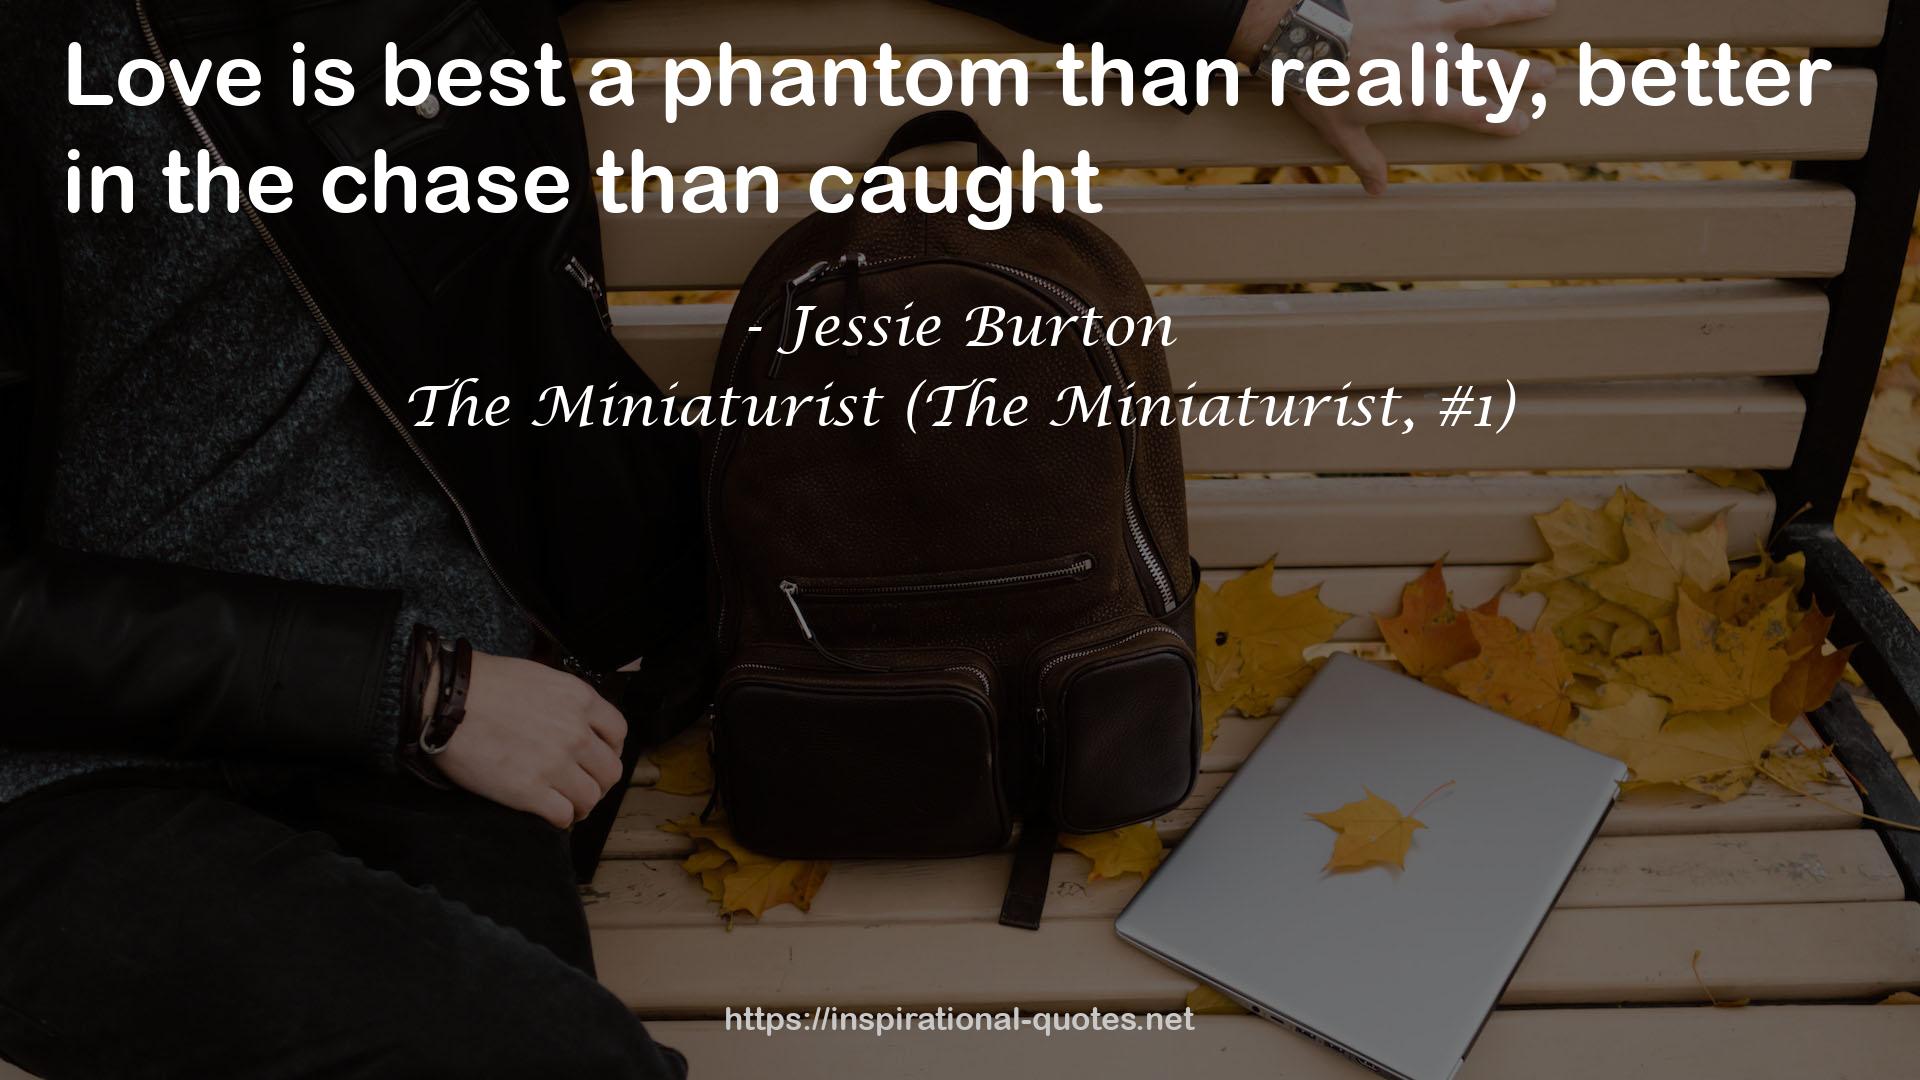 The Miniaturist (The Miniaturist, #1) QUOTES